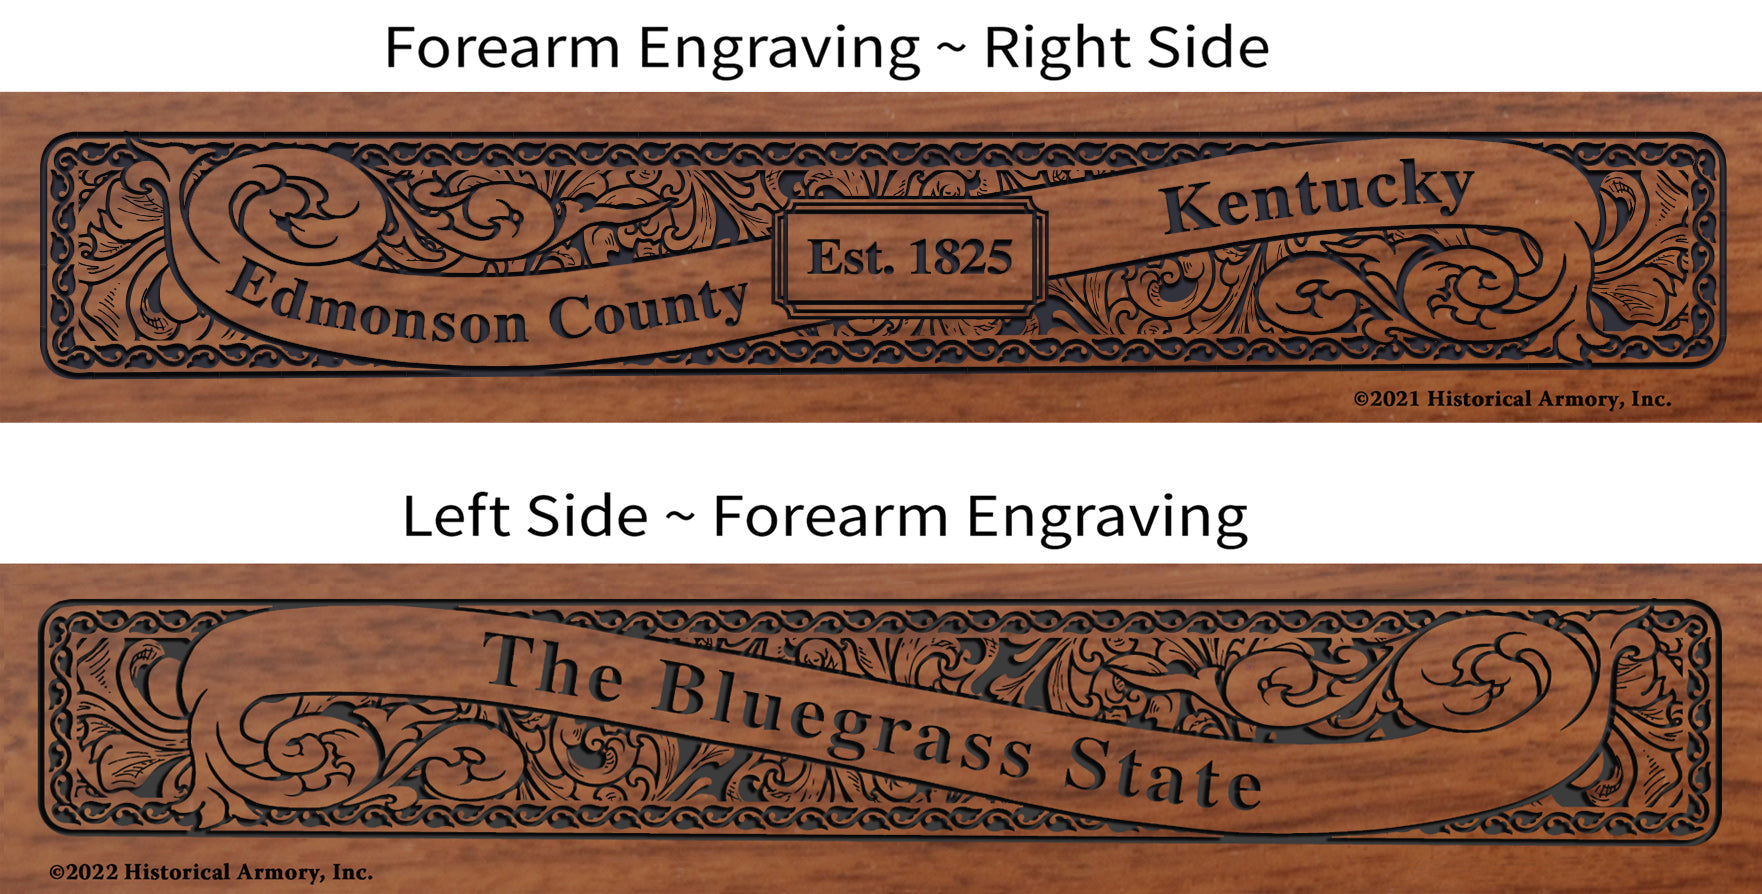 Edmonson County Kentucky Engraved Rifle Forearm